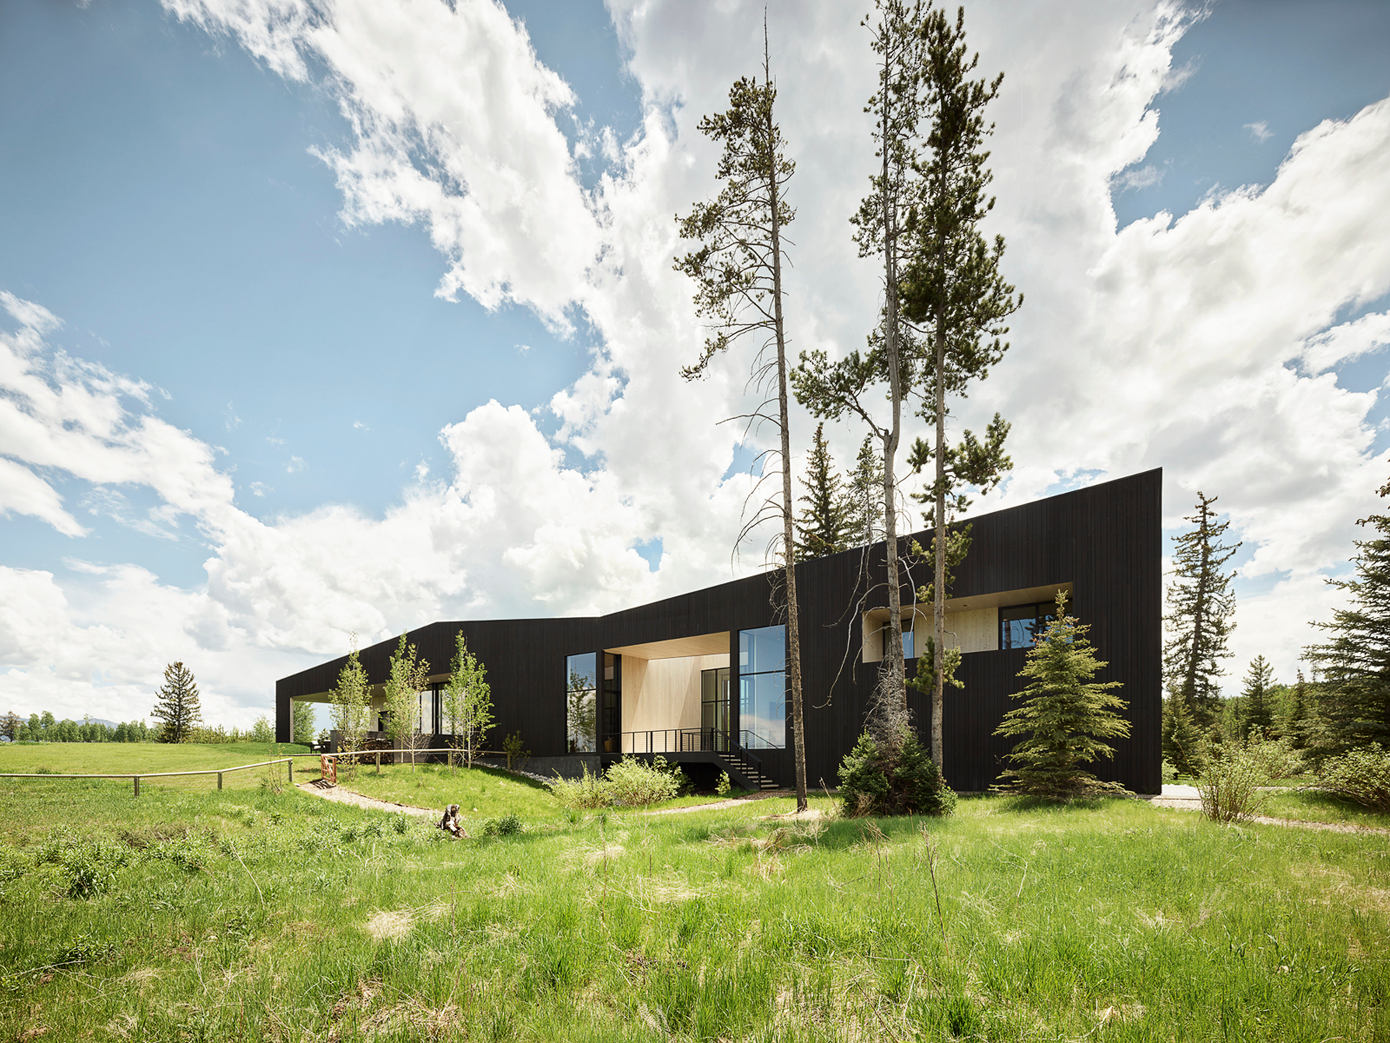 ShineMaker: Teton-Inspired Mountain Home in Wyoming